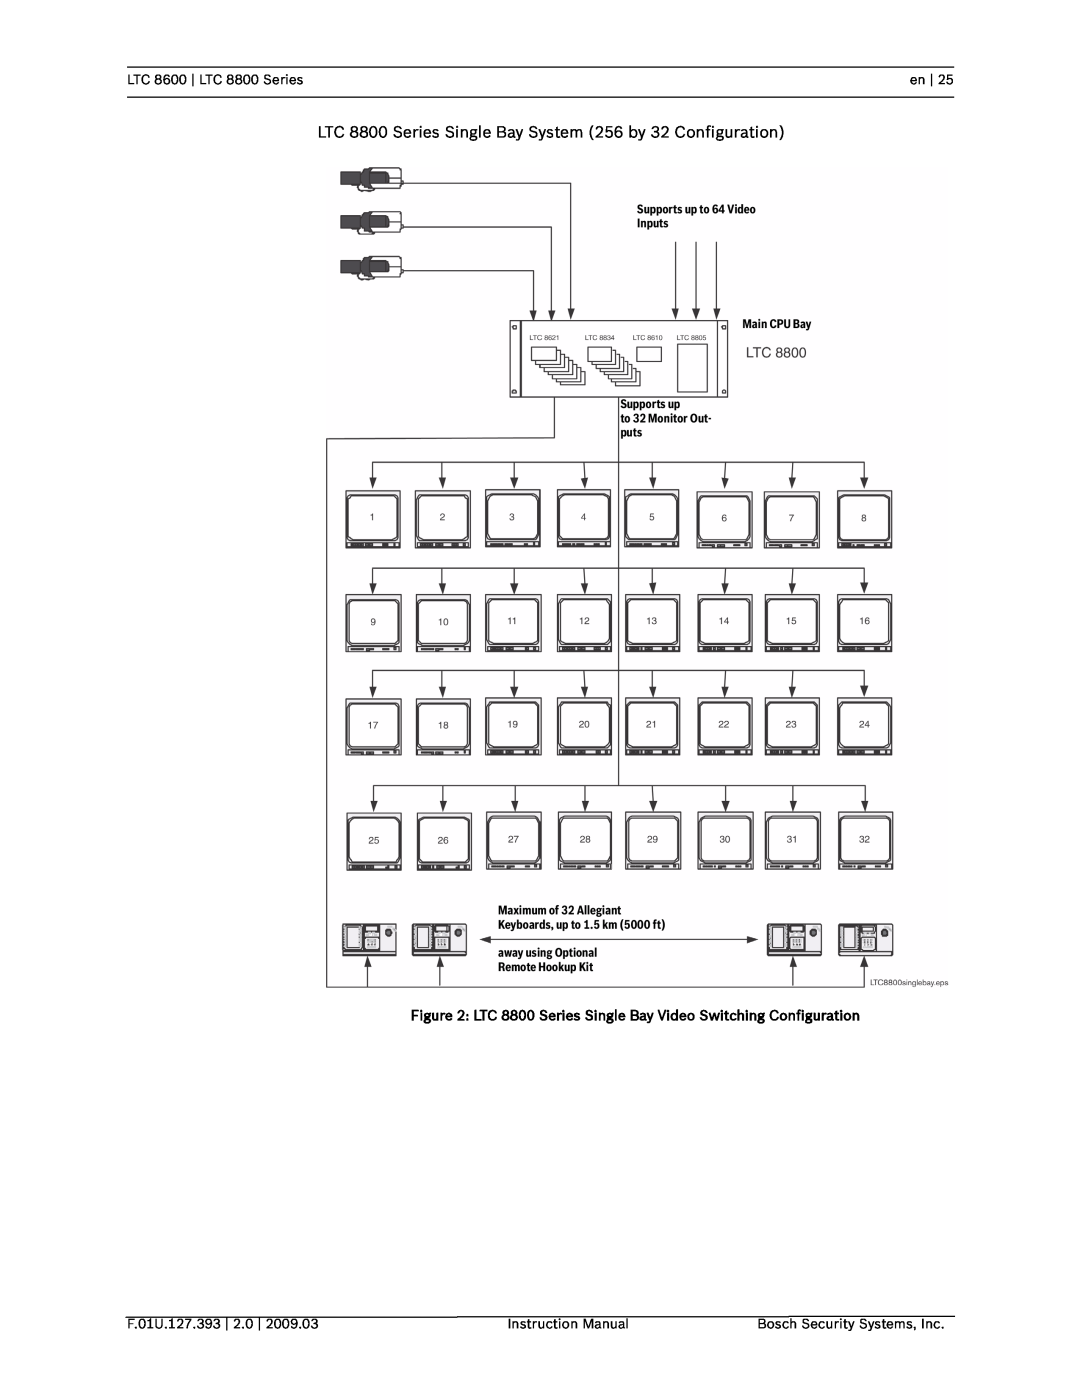 Bosch Appliances LTC 8600 | LTC 8800 Series, en, F.01U.127.393 | 2.0, Instruction Manual, Bosch Security Systems, Inc 